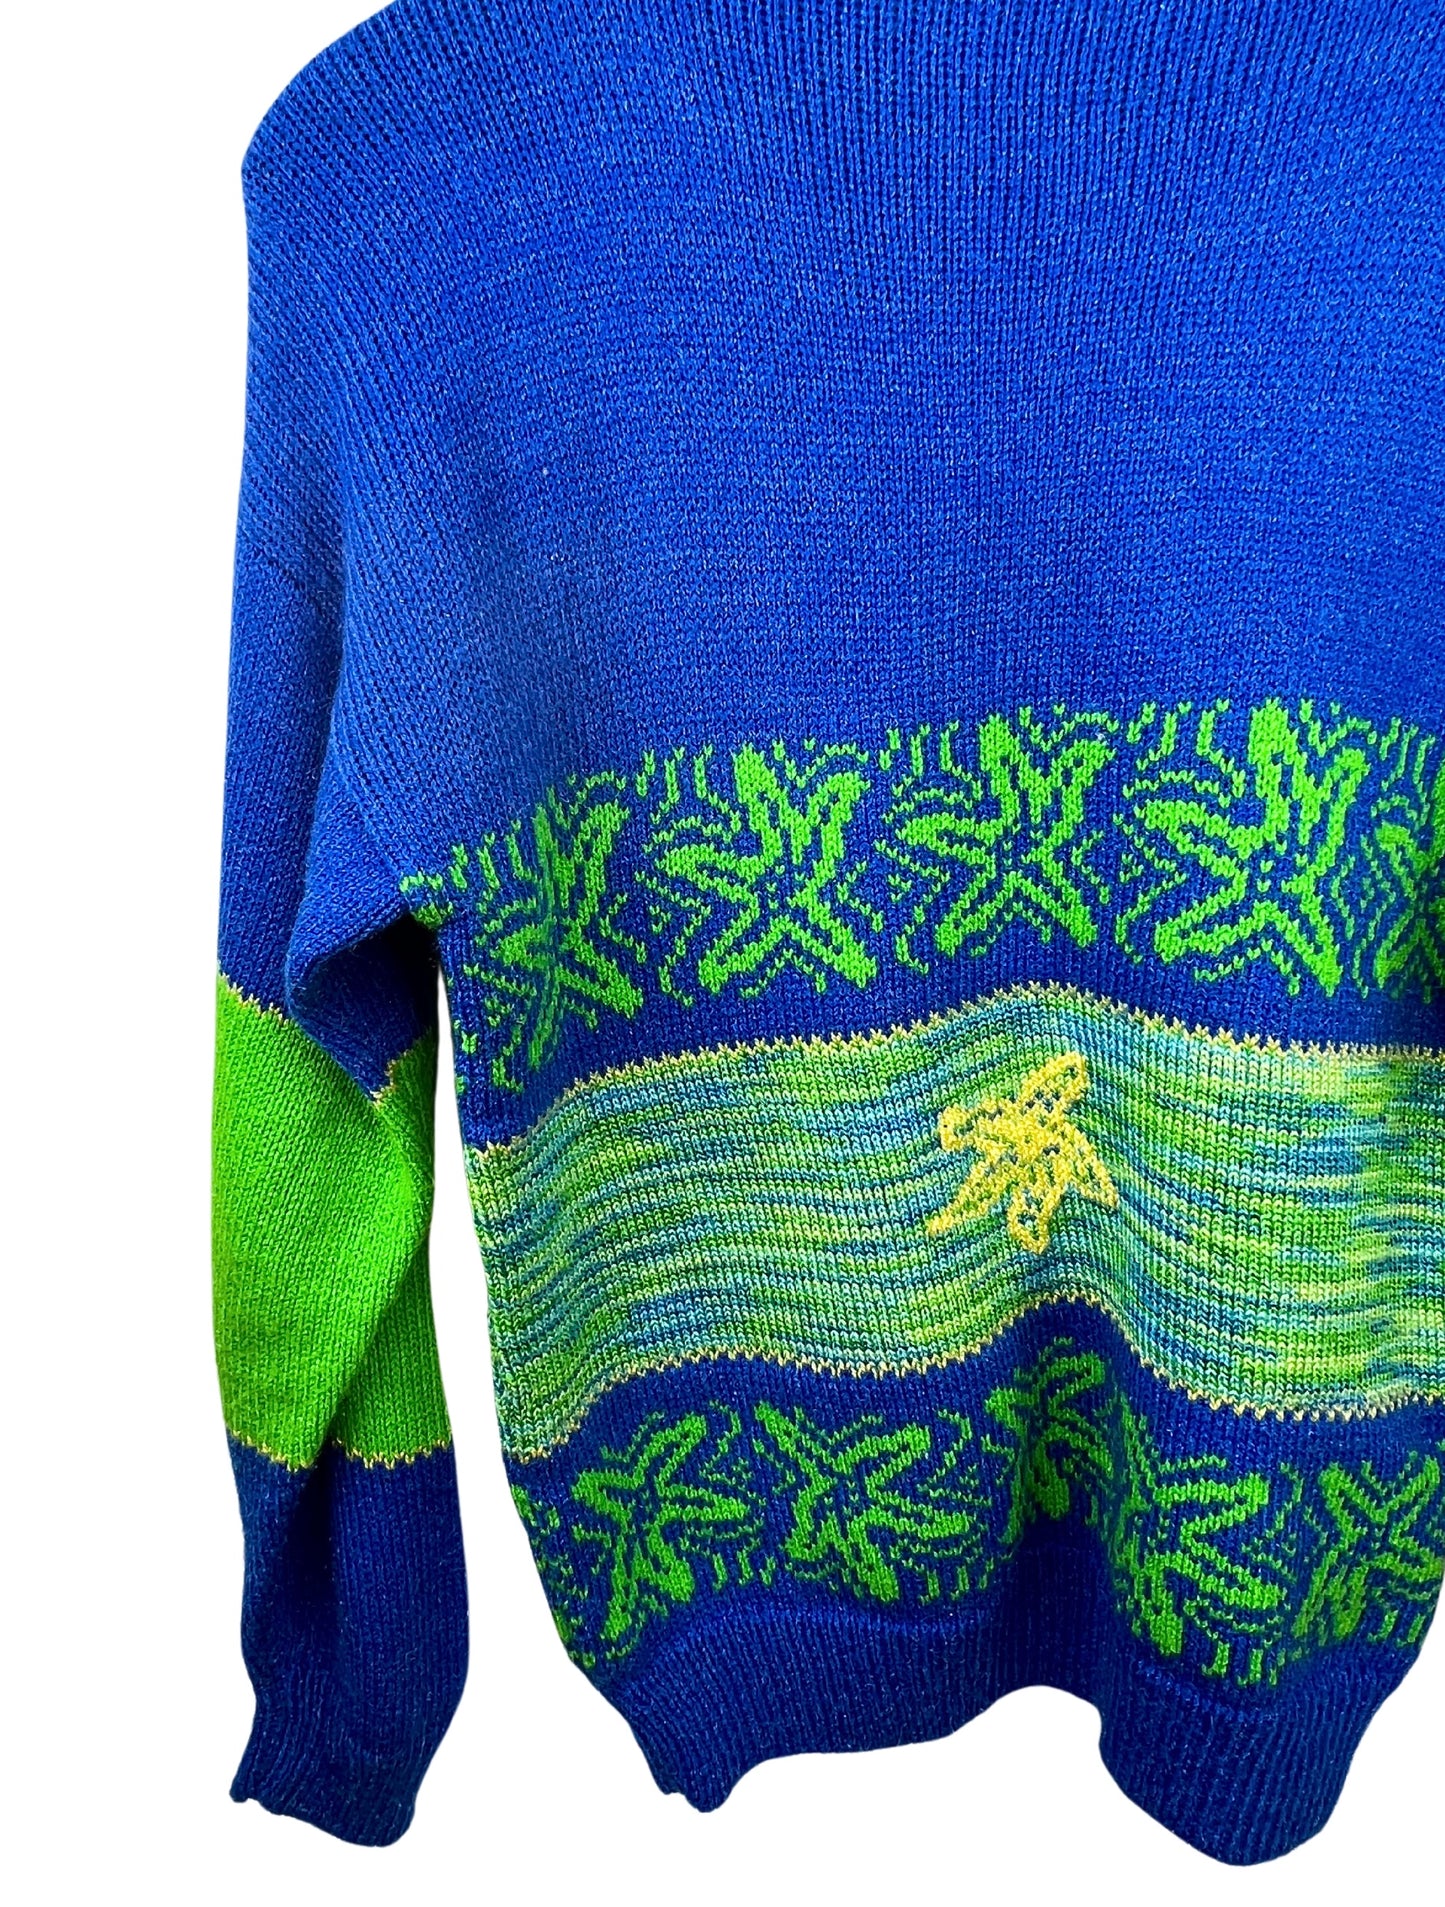 80’s STARFISH Space Dye Striped Ocean Novelty Sweater Size XS